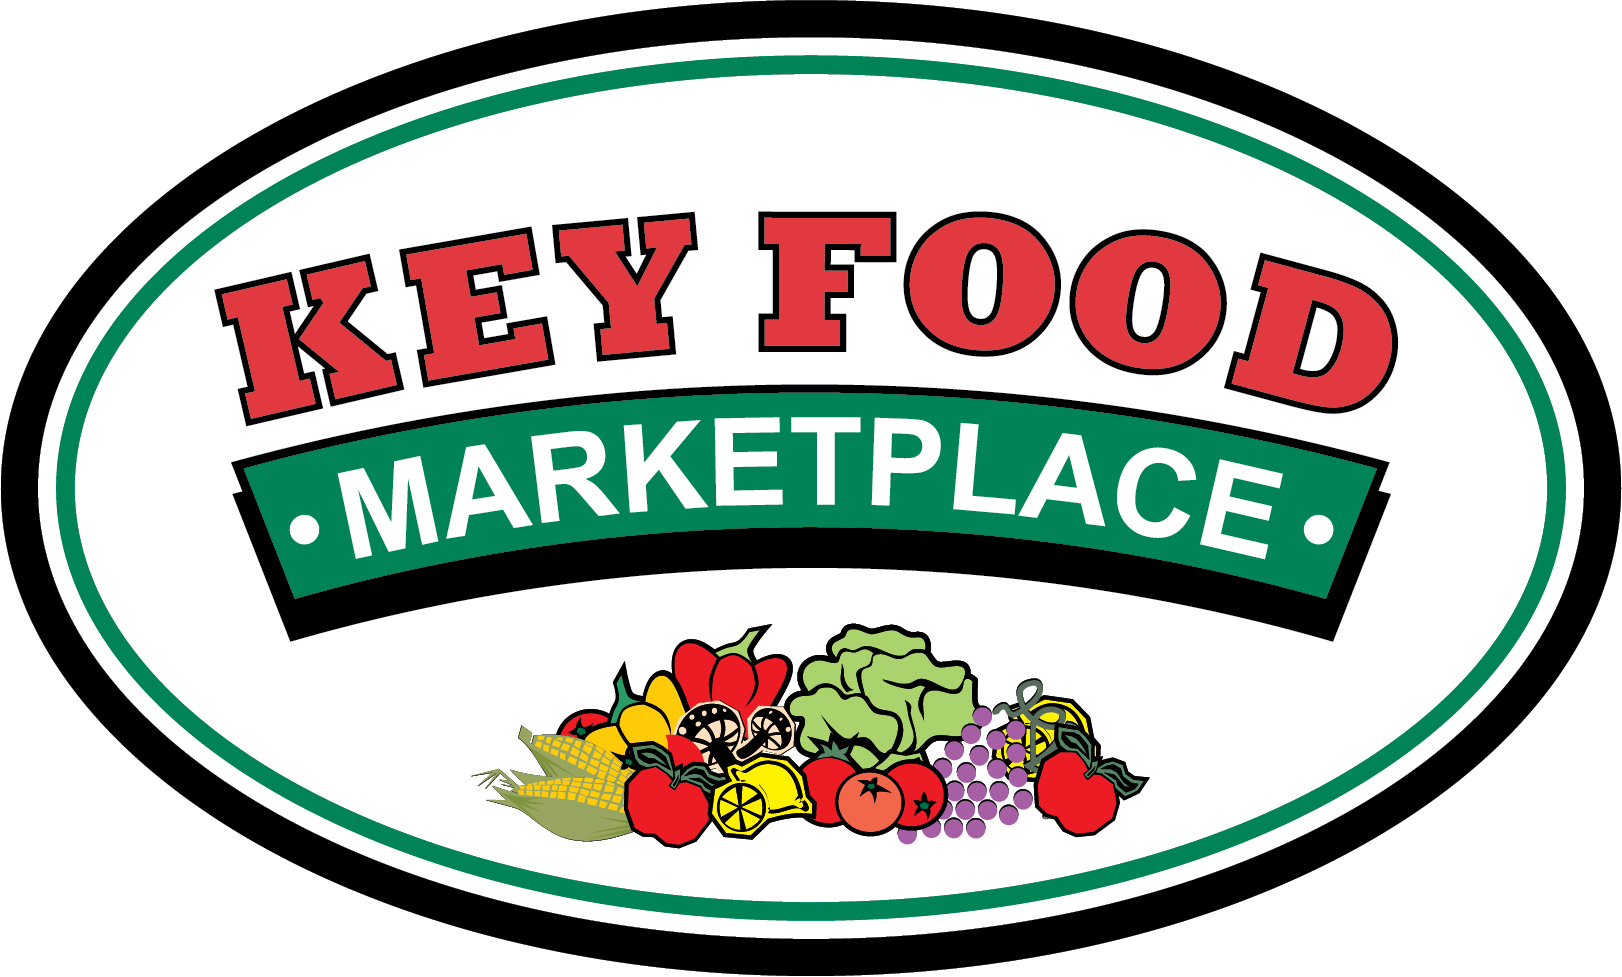 Key Food Market Place